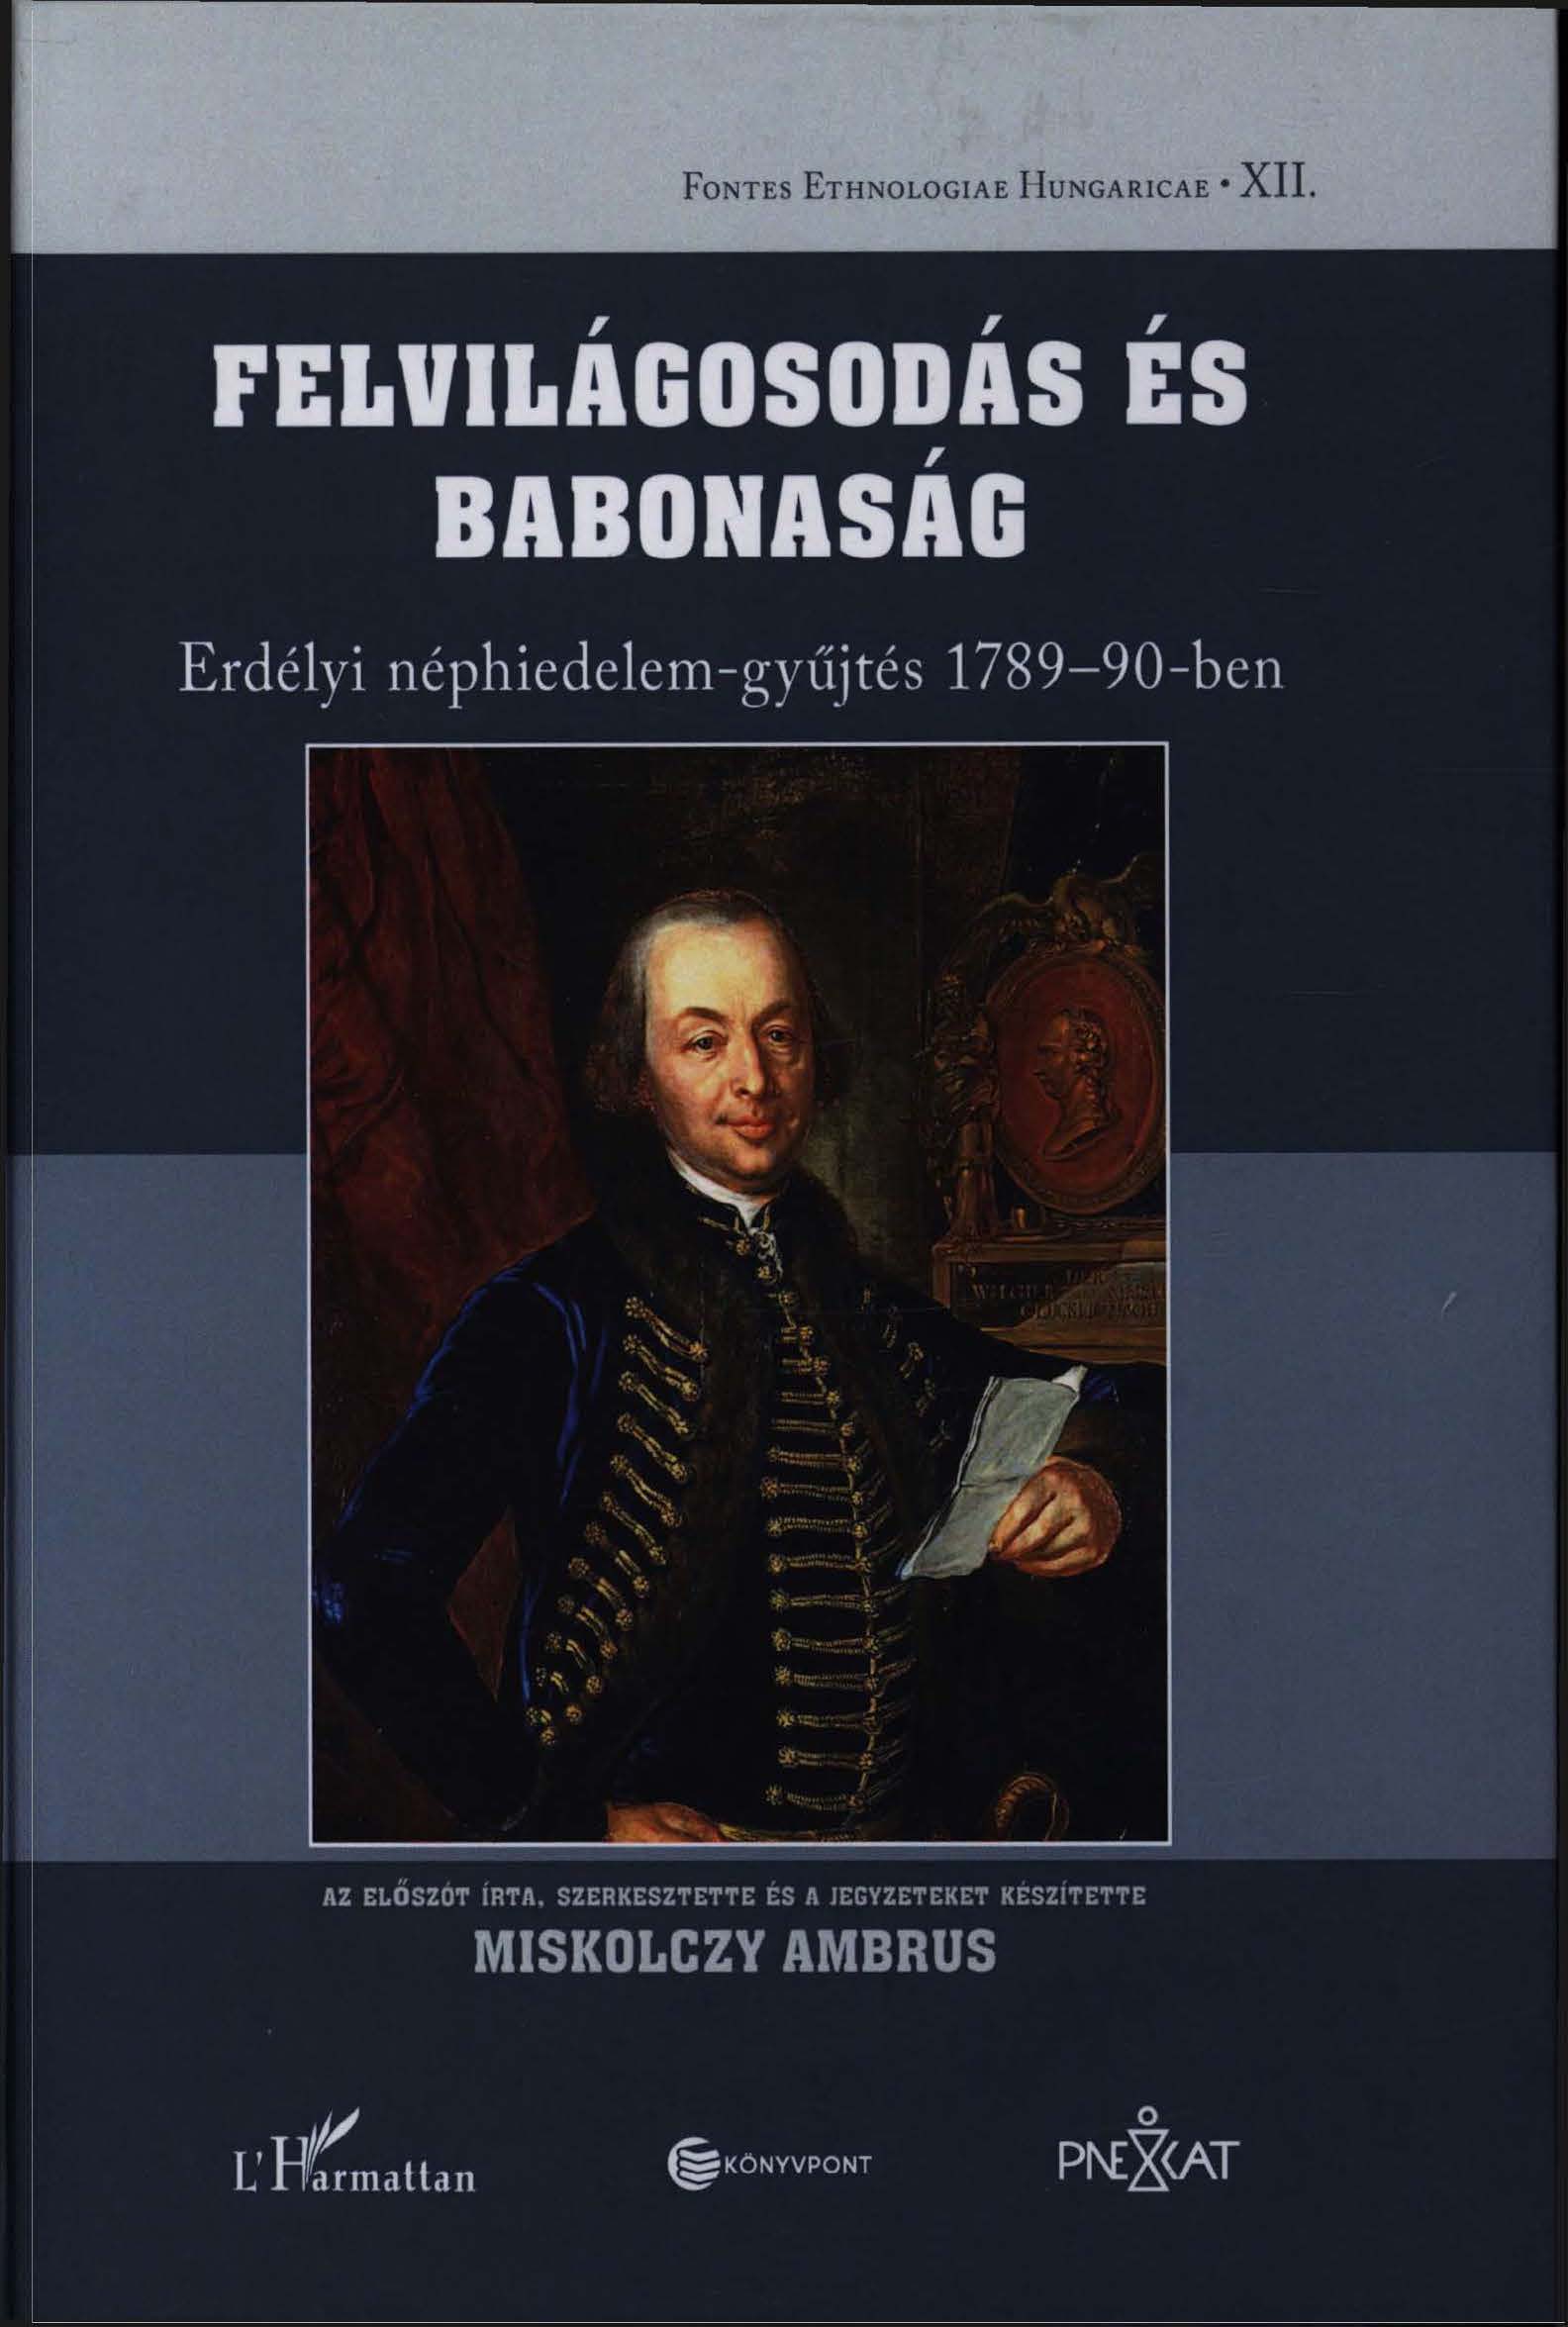 MISKOLCZY A. Felvilgosods s babonasg FONT XII cover